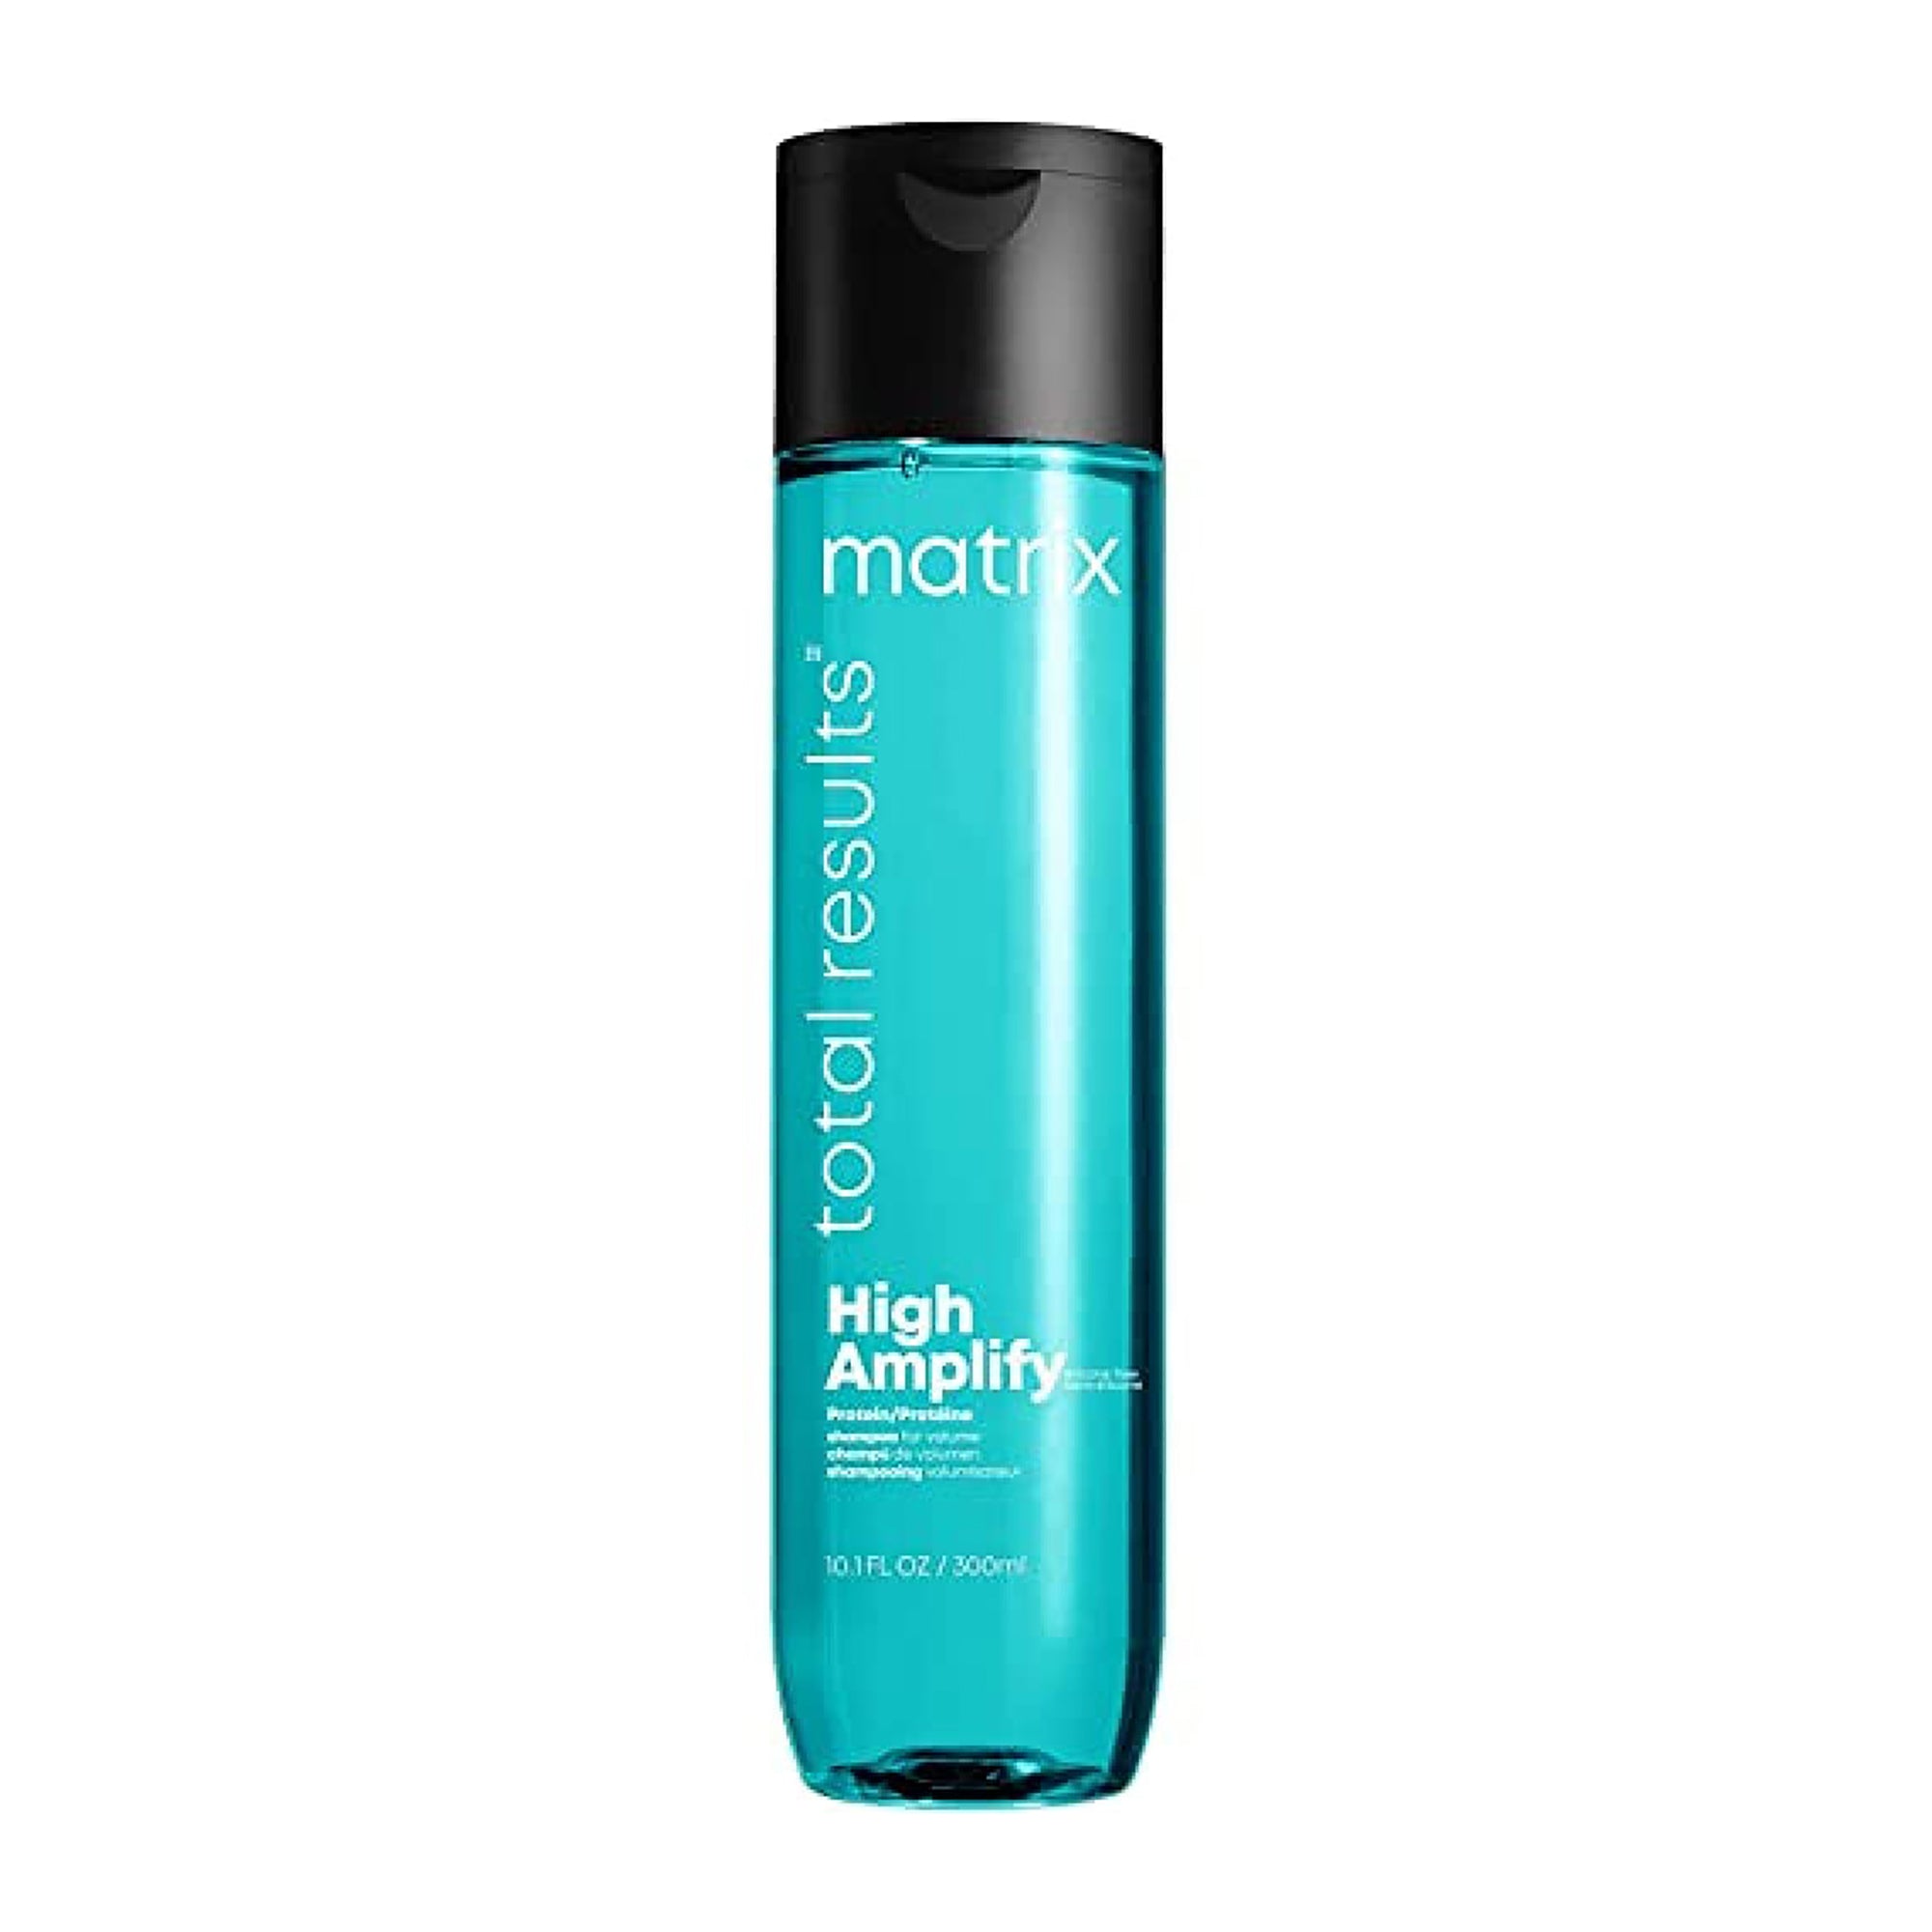 Matrix High Amplify Shampoo / 10 OZ